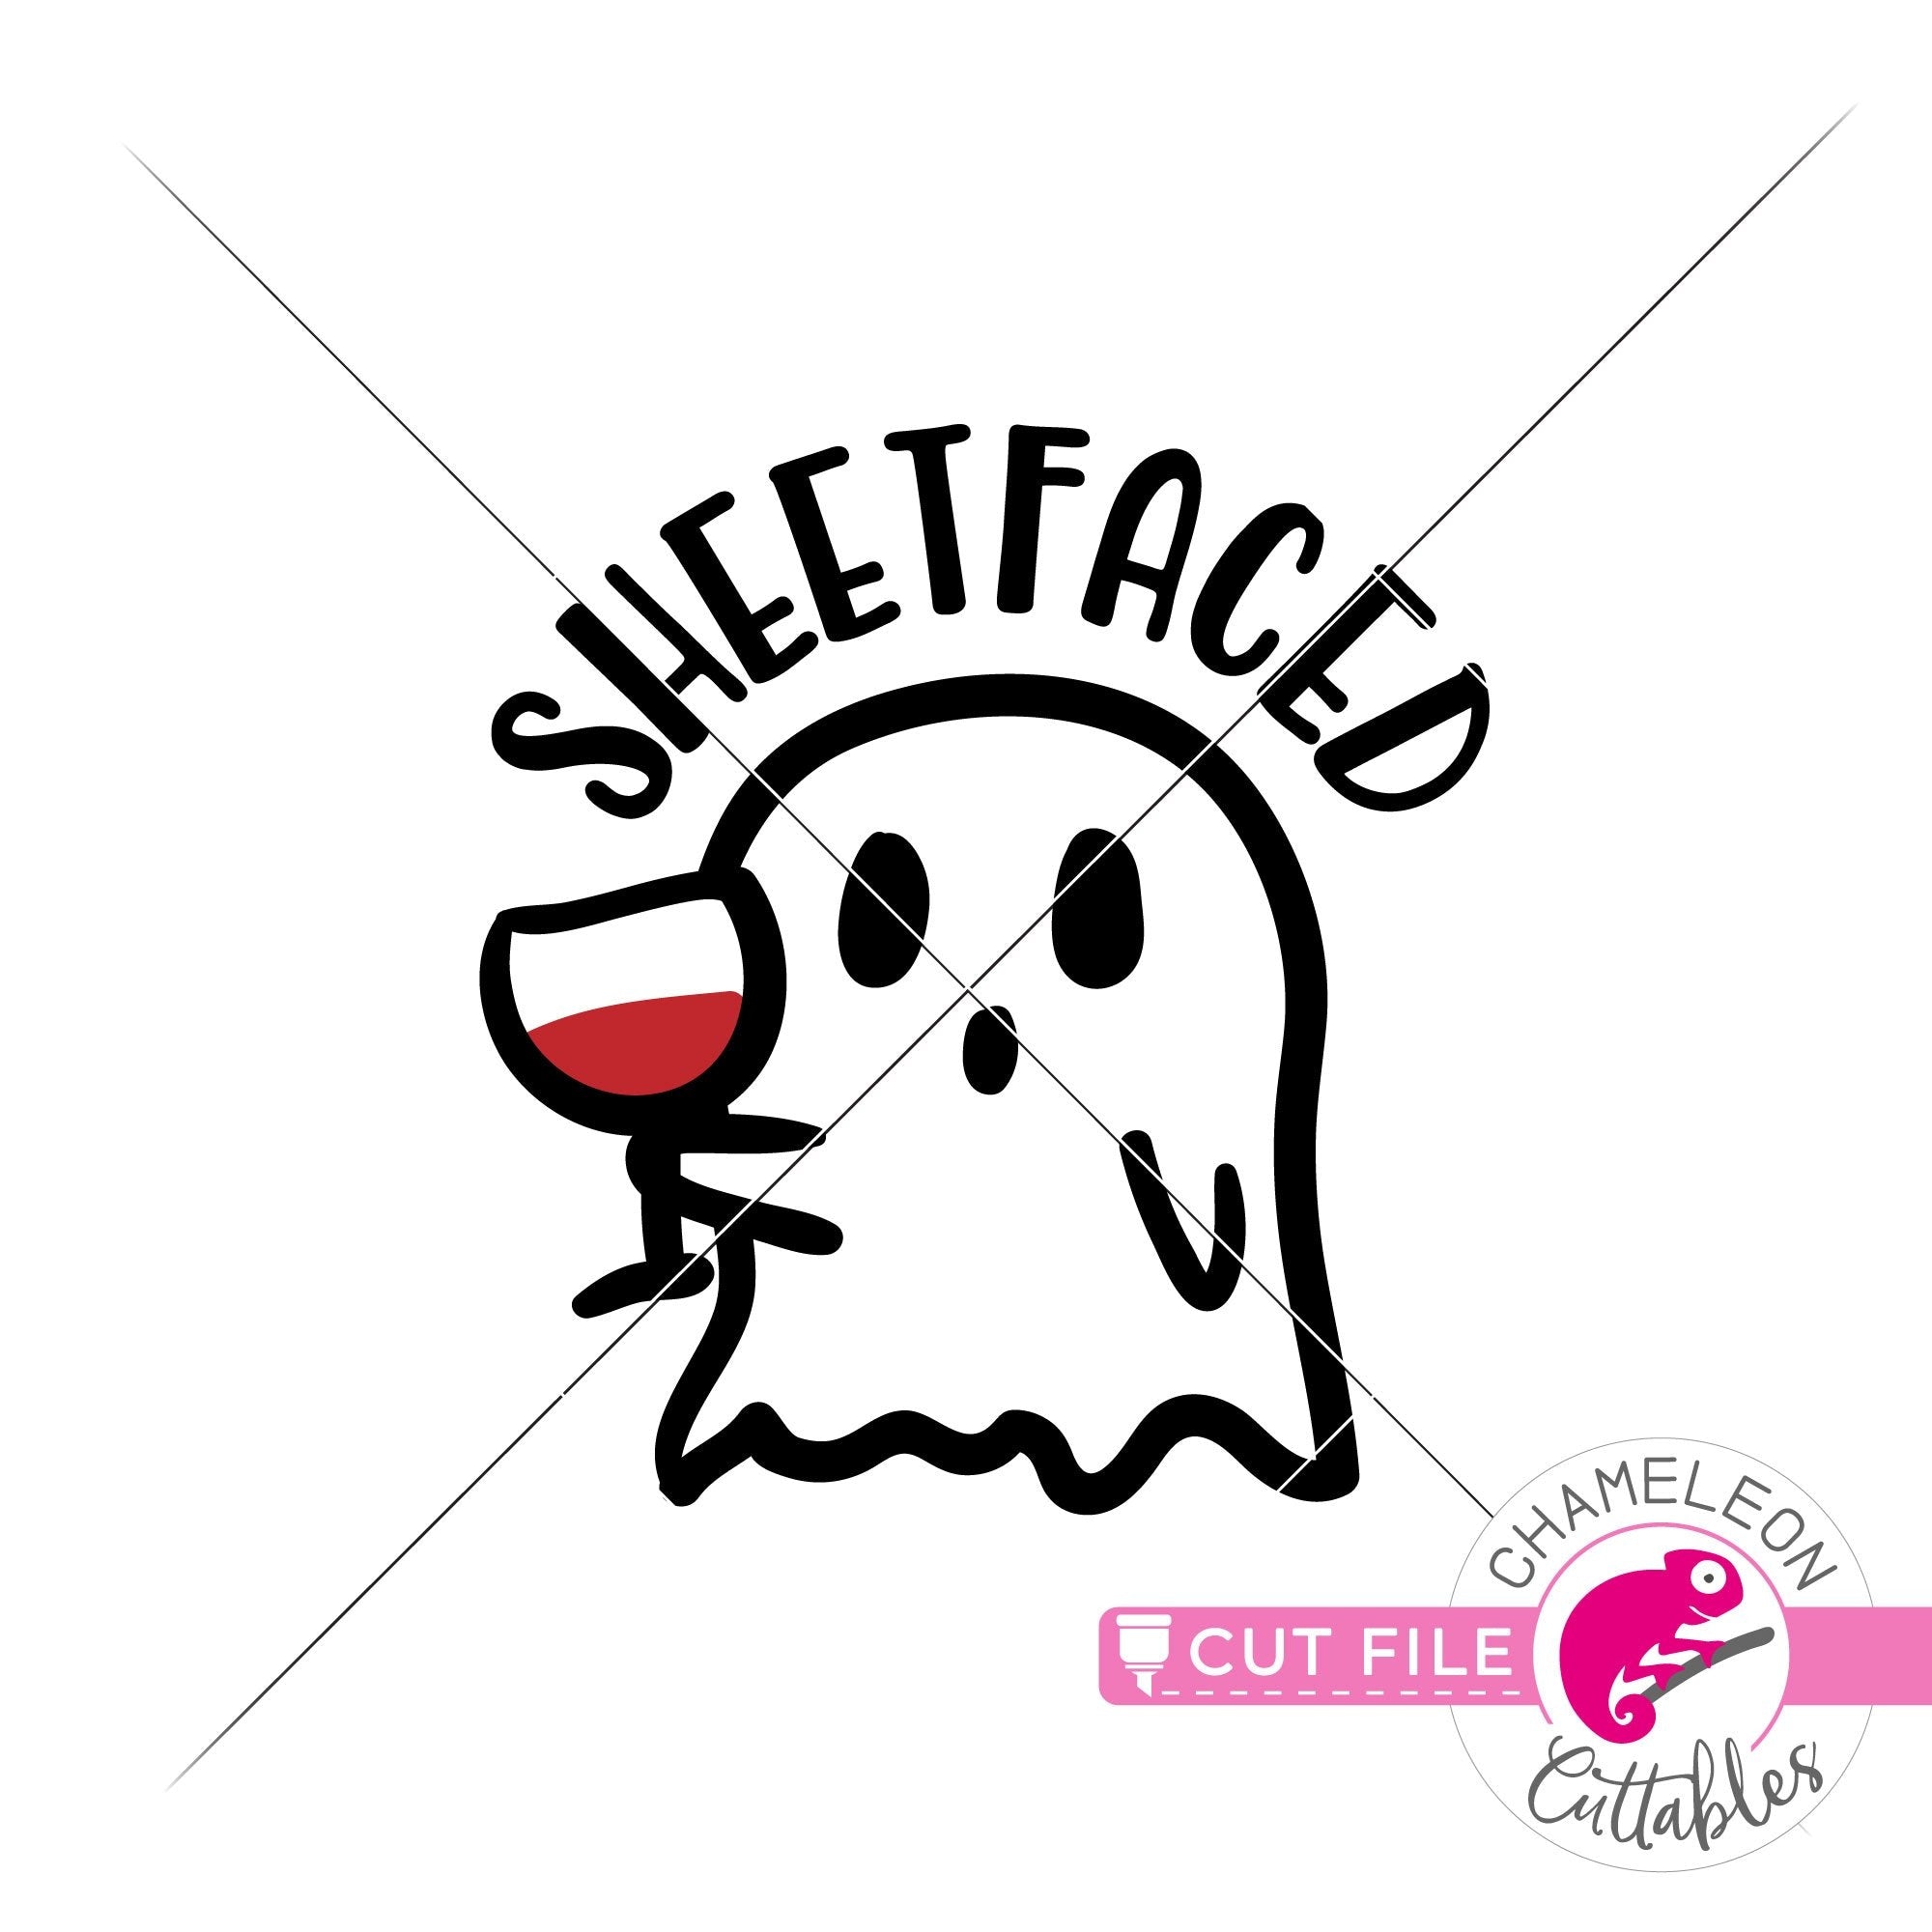 Download Sheetfaced Halloween Ghost Svg Png Dxf Eps Jpeg Chameleon Cuttables Llc Chameleon Cuttables Llc